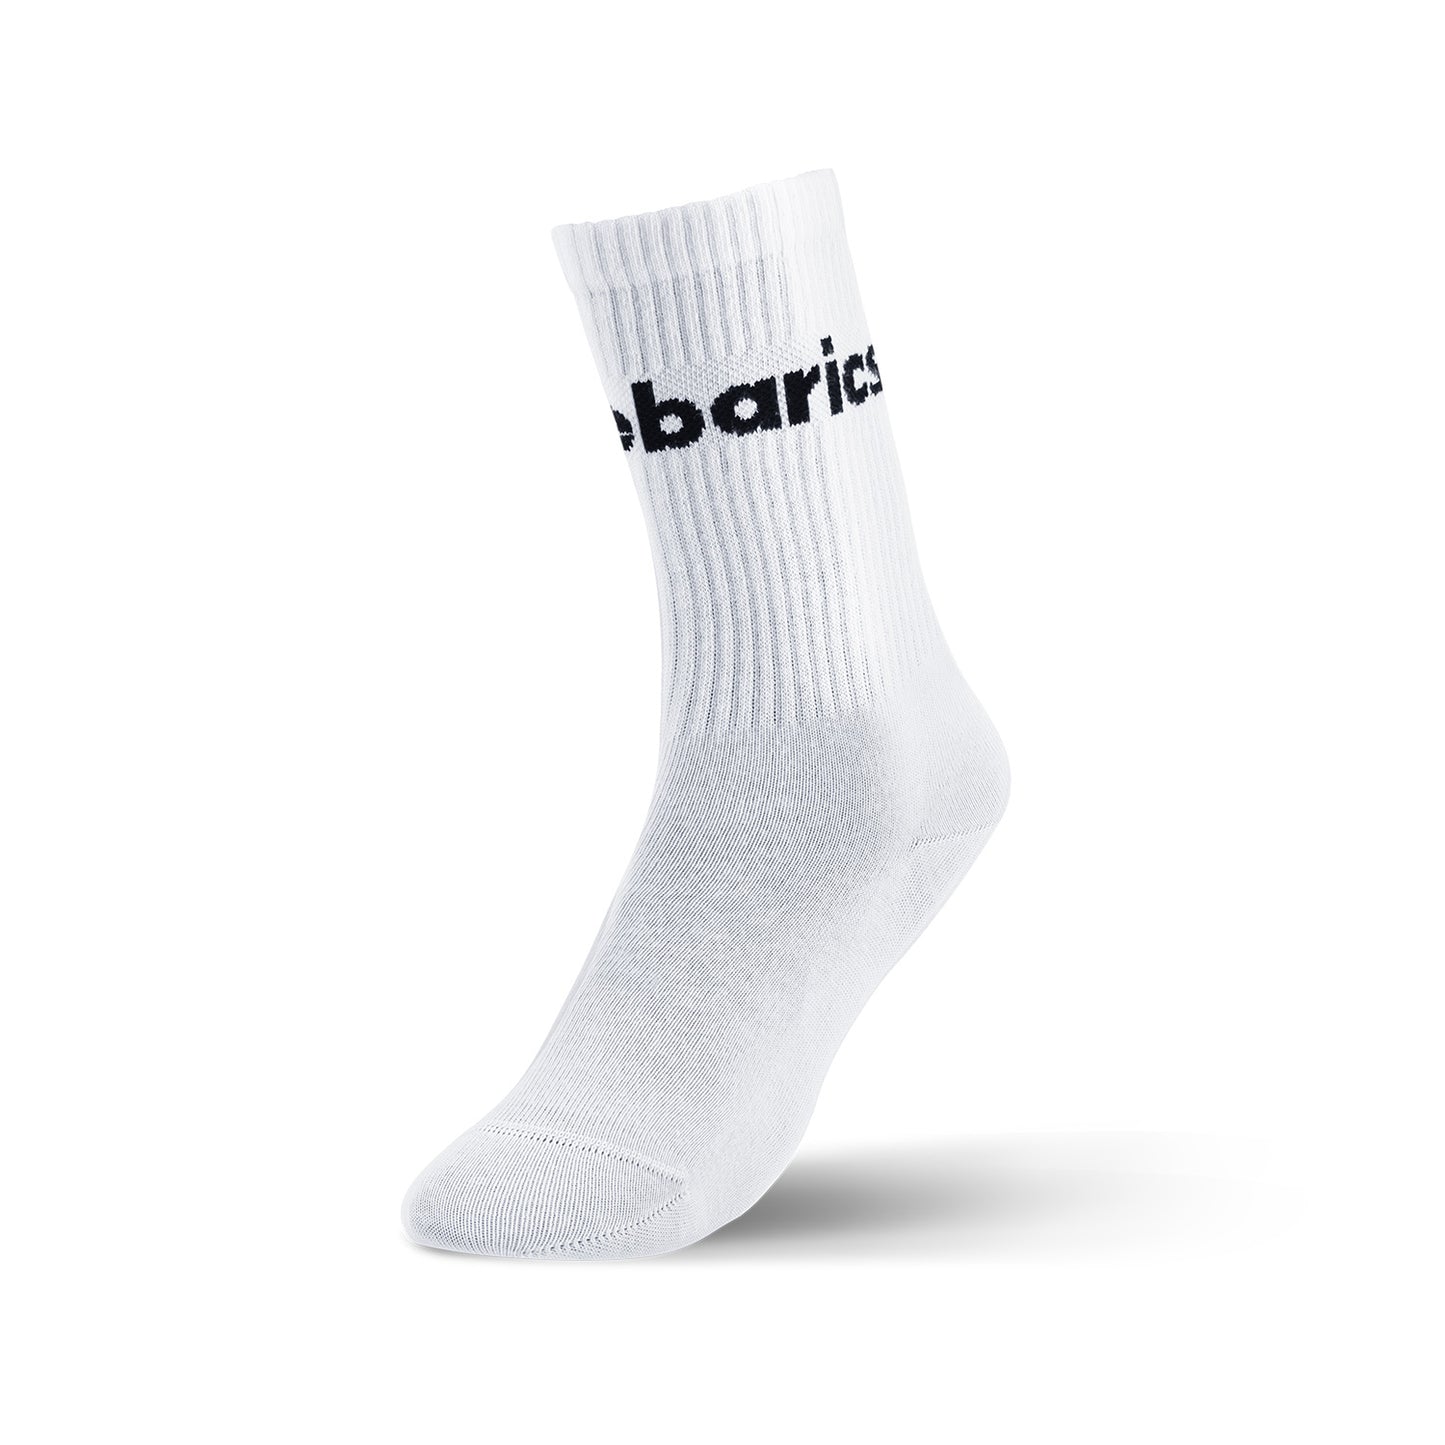 Barebarics Barefoot Socks - Crew - White/Big logo